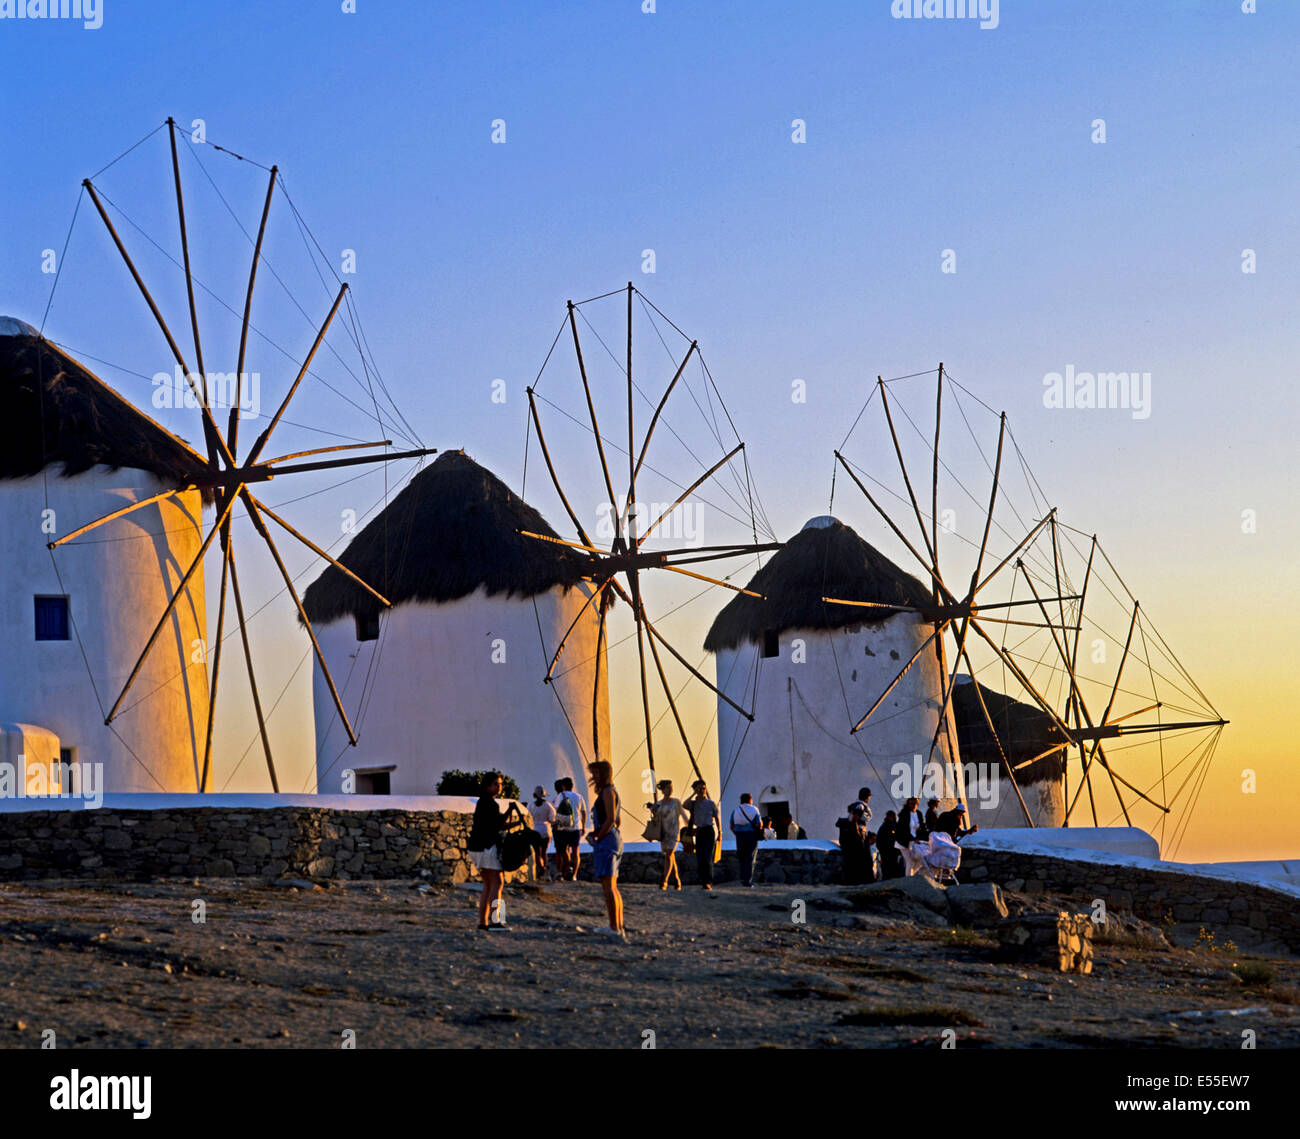 The Windmills of Mykonos Island at sunset, Cyclades Islands, Greece Stock Photo